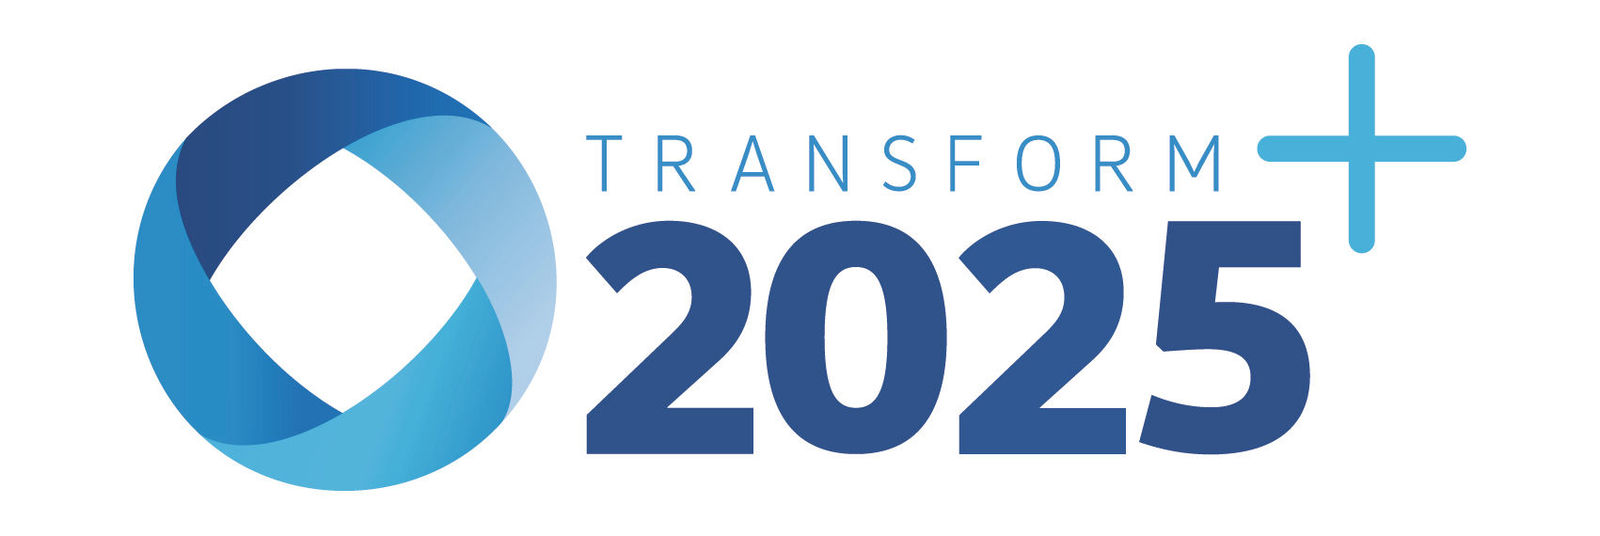 Logo Transform 2025+